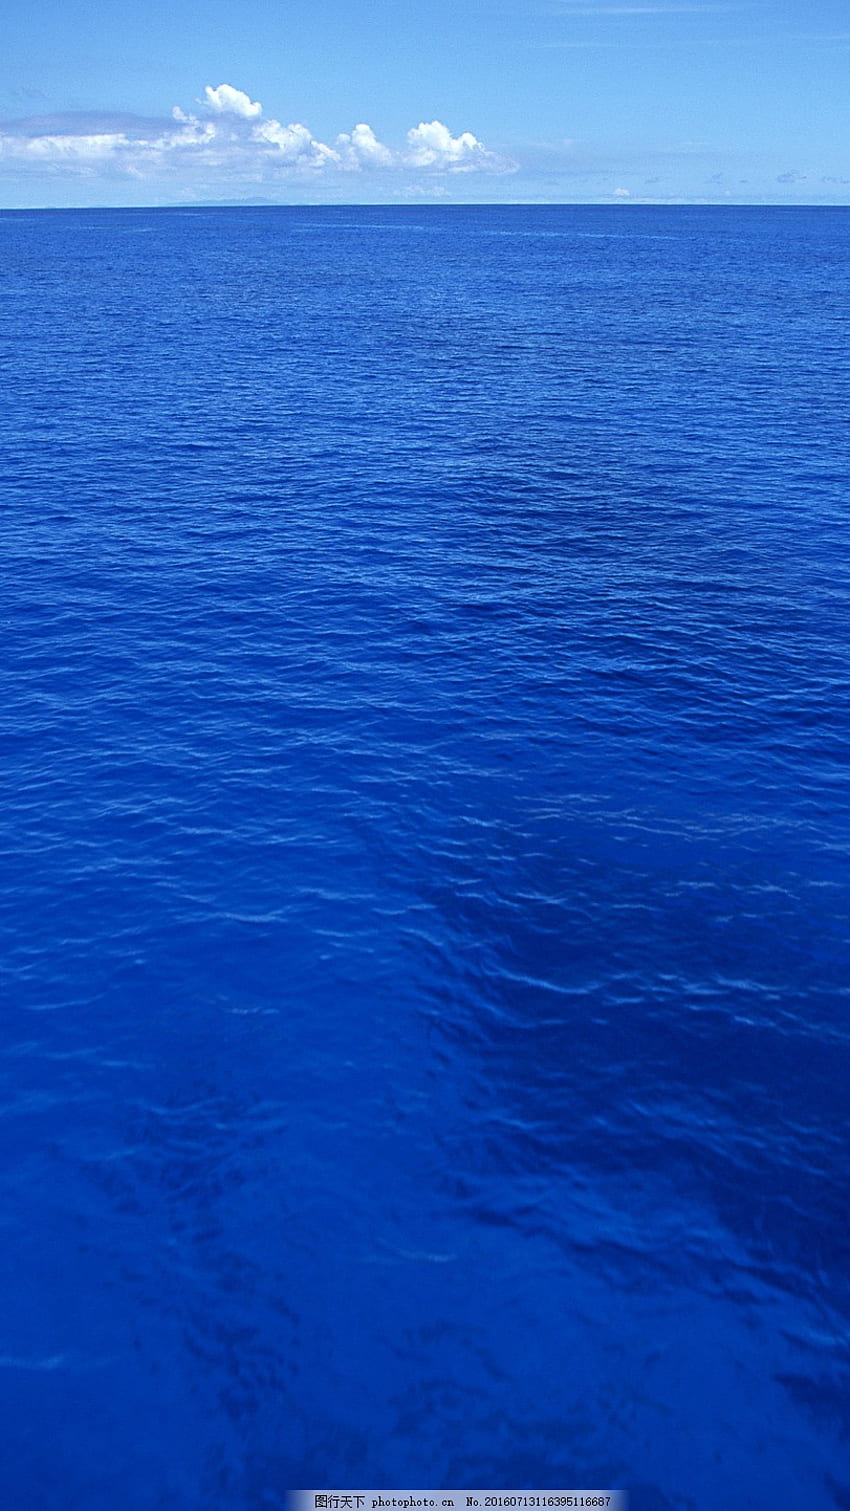 Warna Biru, Laut Warna Biru wallpaper ponsel HD